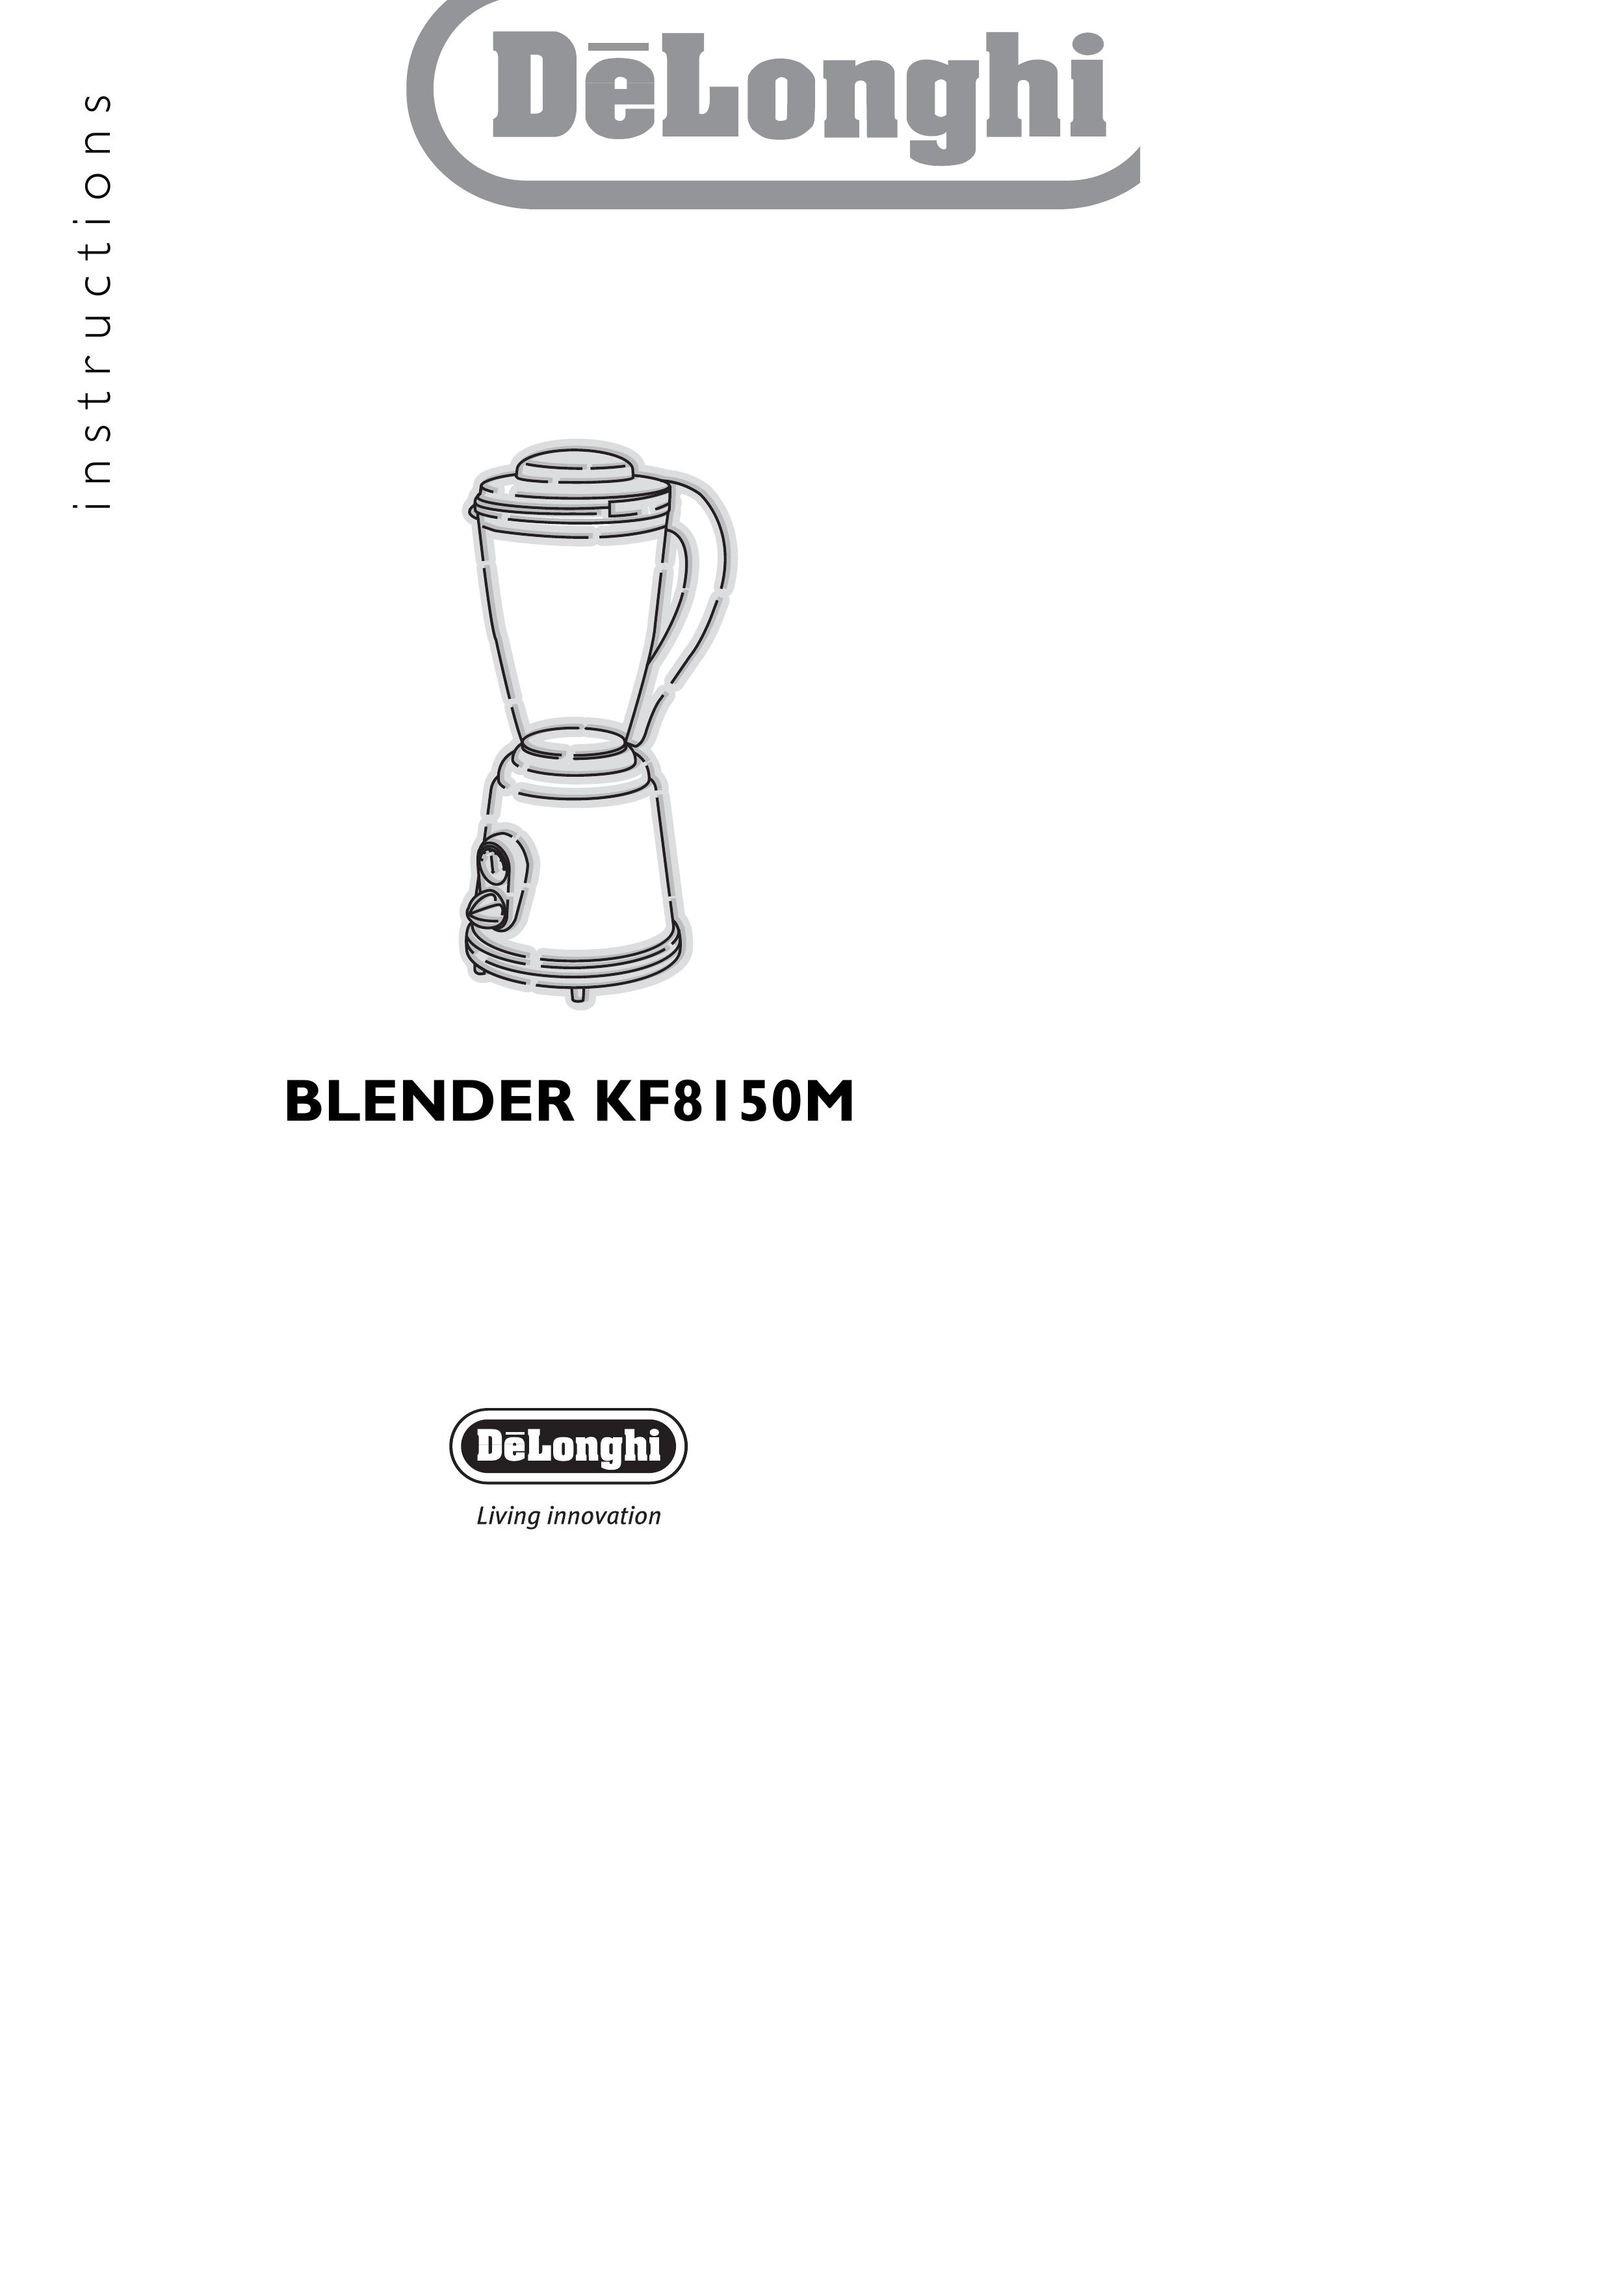 DeLonghi KF8150M Blender User Manual